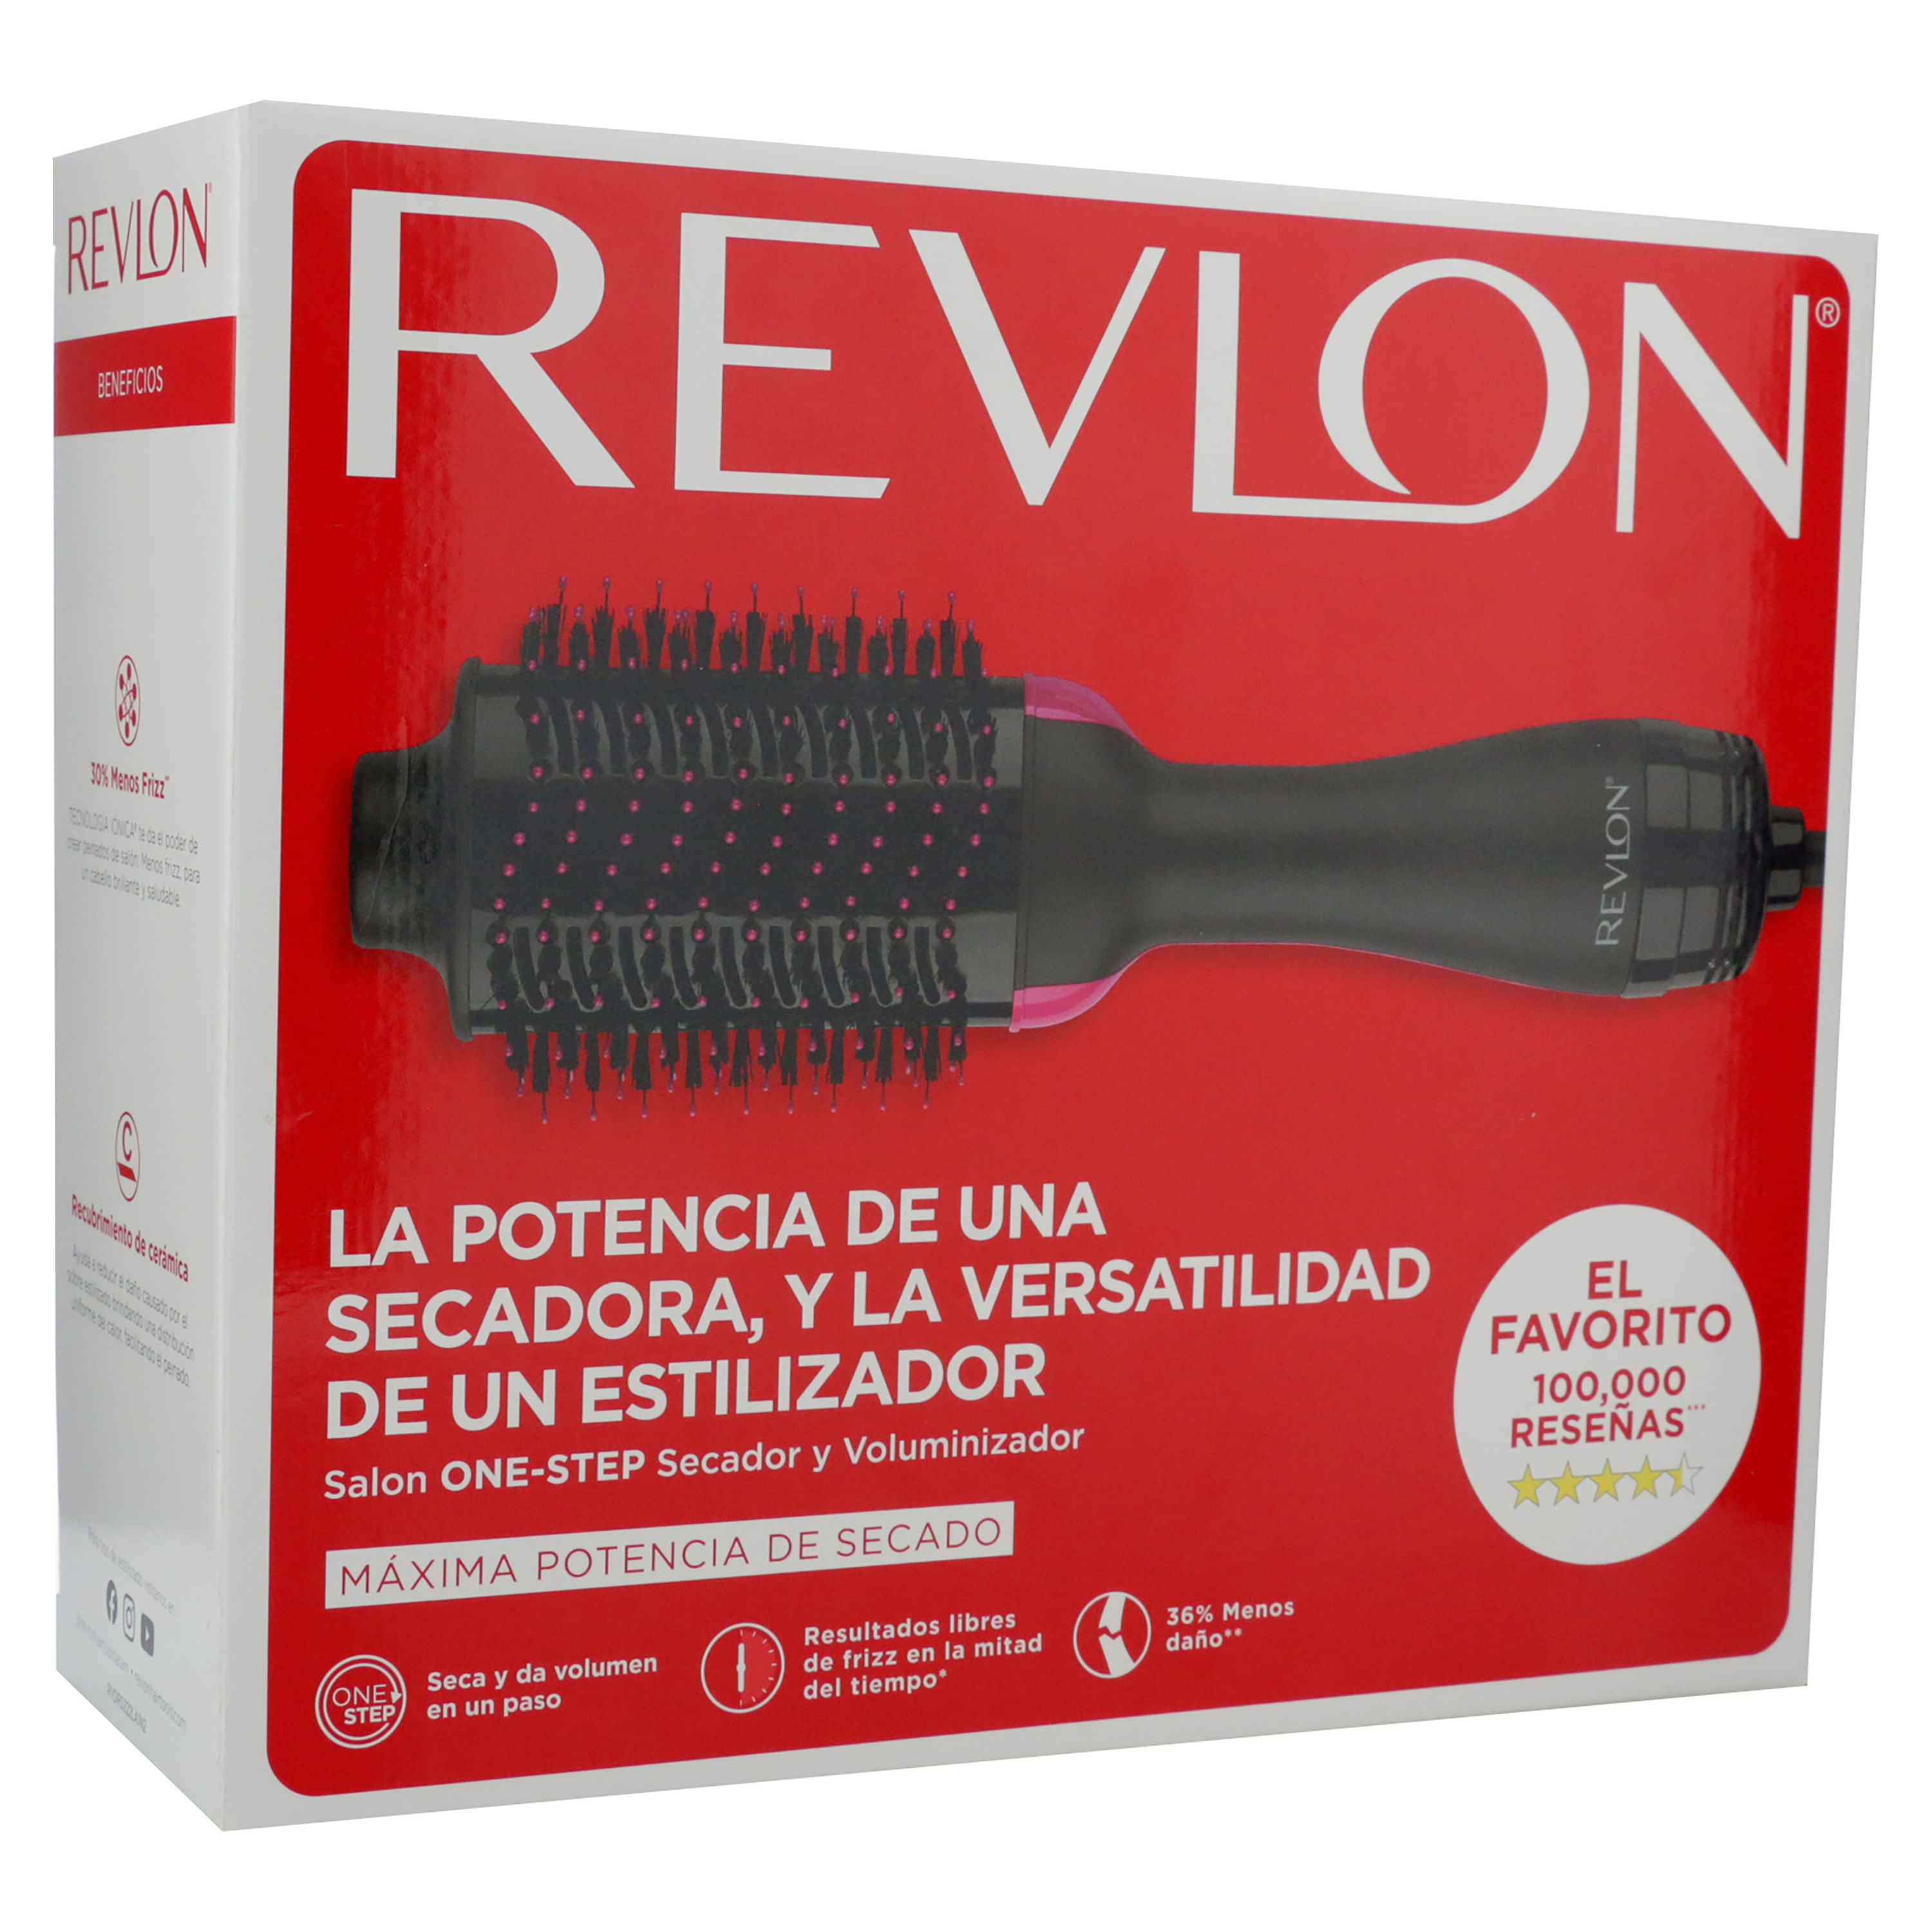 REVLON Salon One-Step Cepillo, Secador y Voluminizador – Tu Clóset Kids